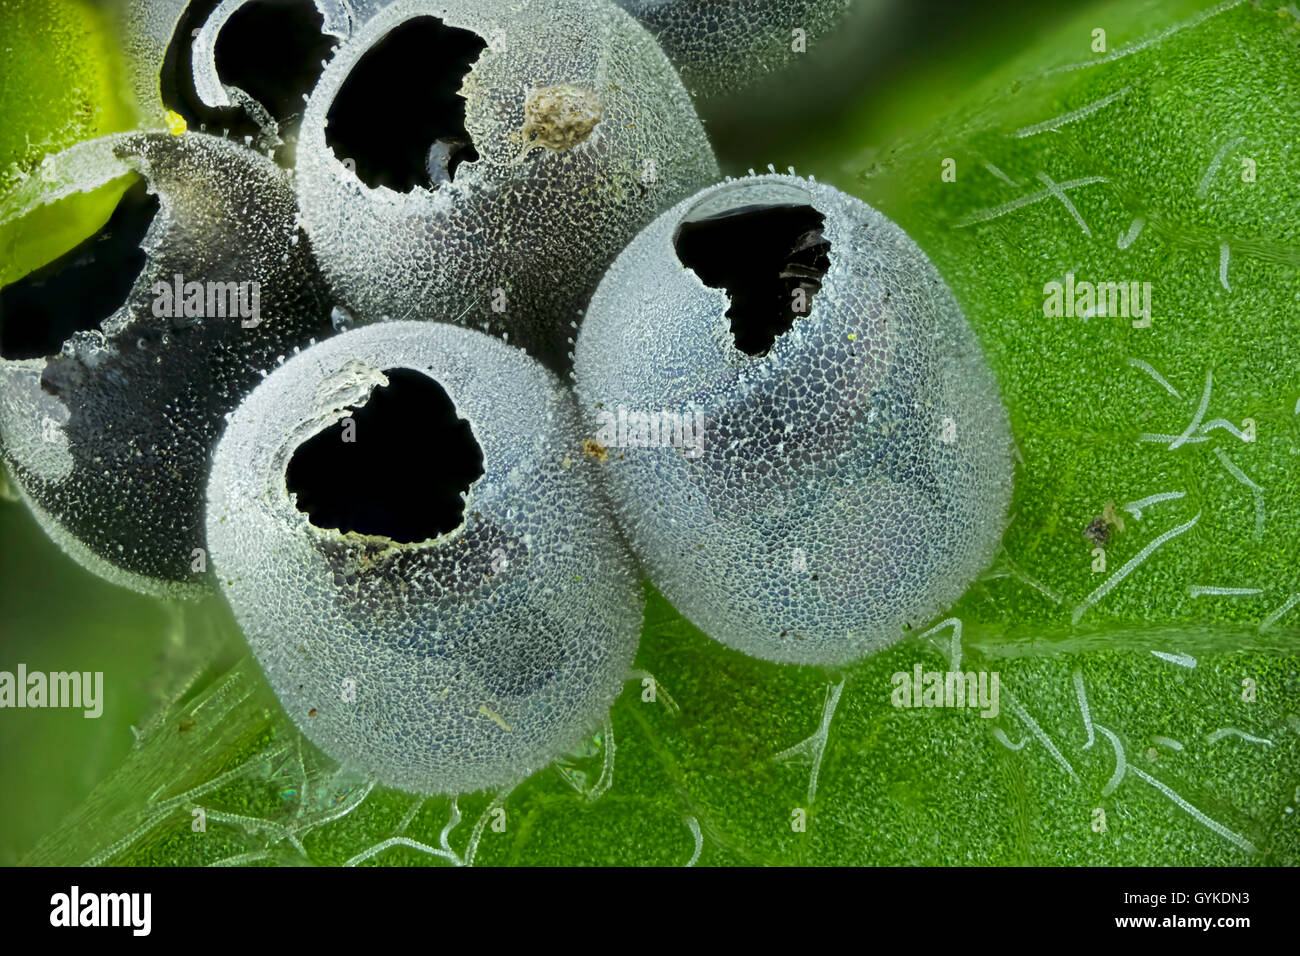 Wanzen (Heteroptera, Hemiptera), Makroaufnahme von Wanzeneiern | heteropterans, true bugs (Heteroptera, Hemiptera), eggs of a tr Stock Photo